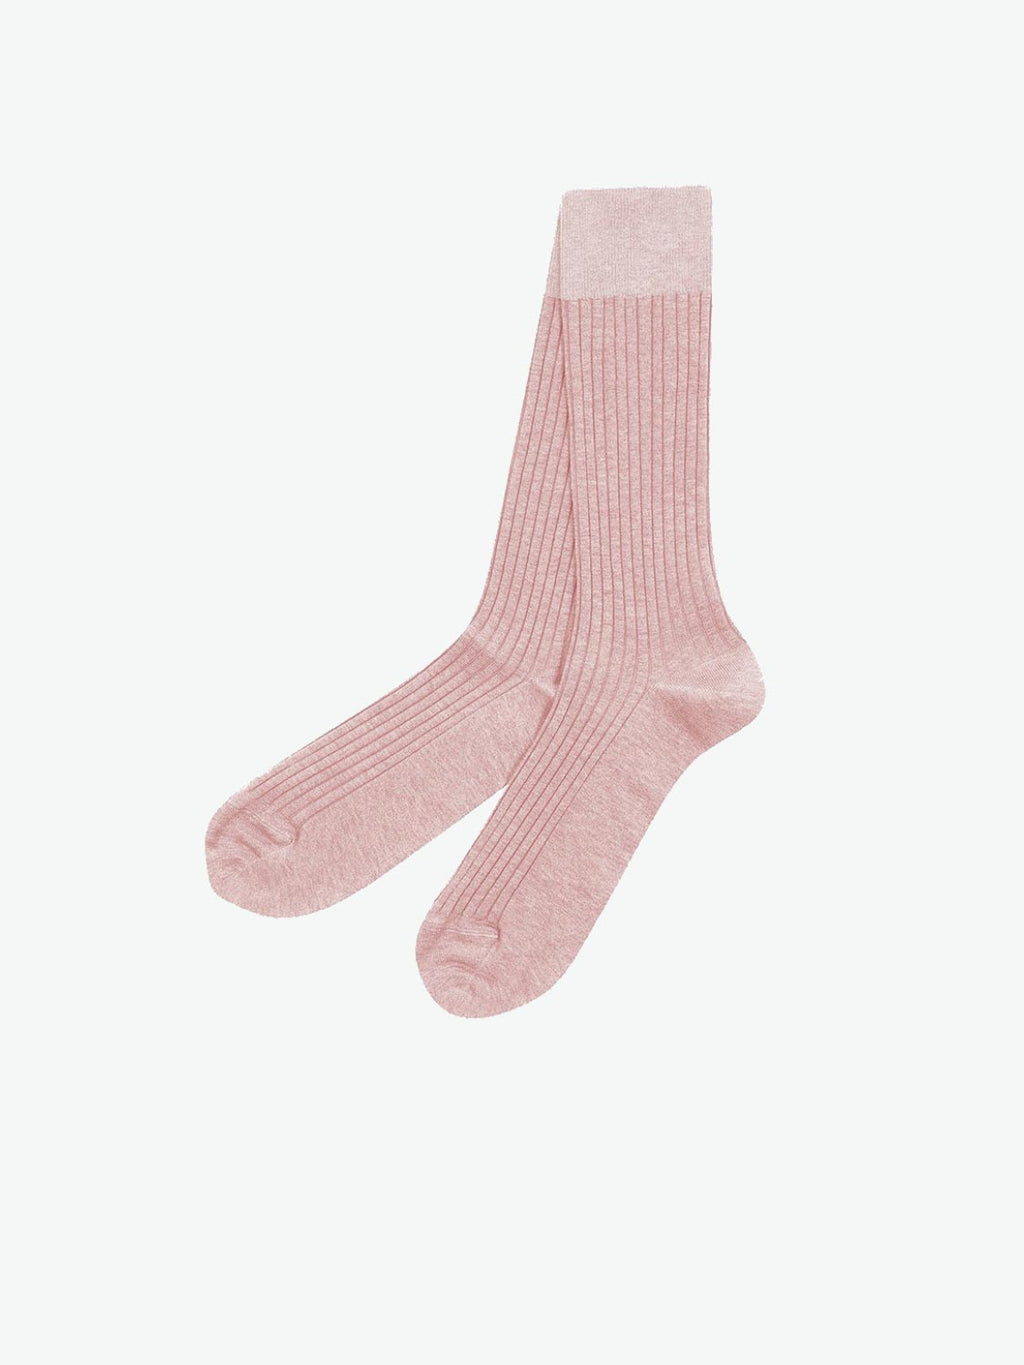 Pantherella Danvers Socks Dusky Pink | The Project Garments - A